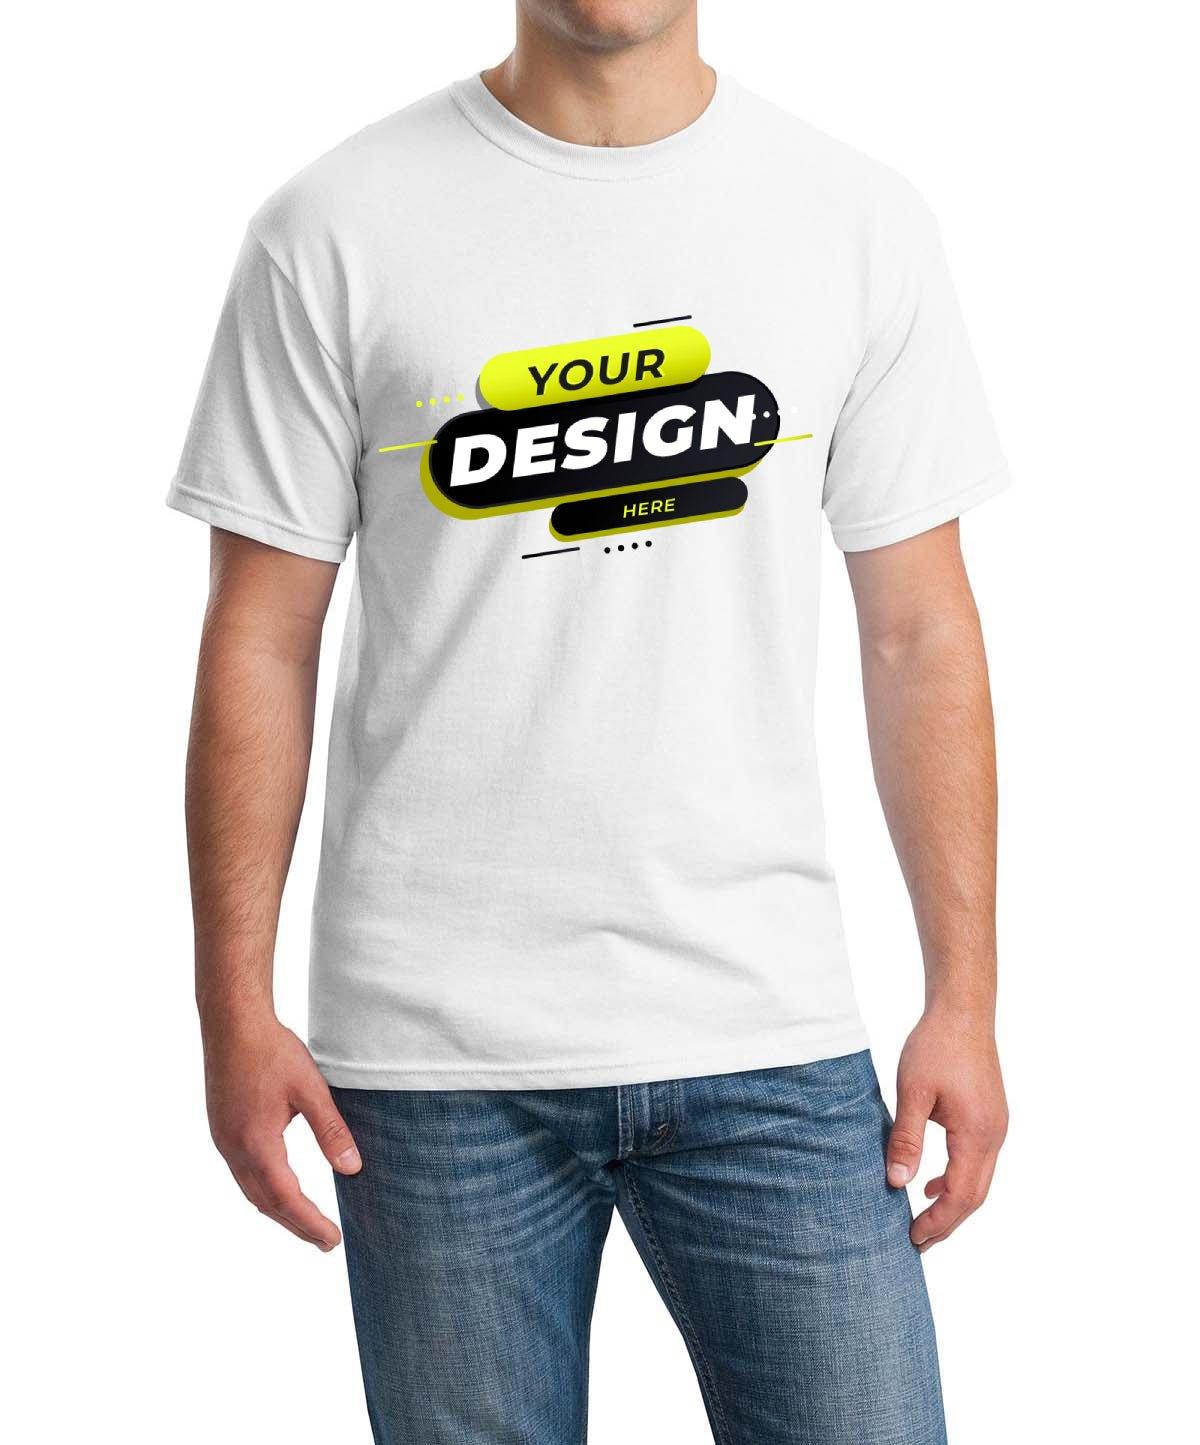 Custom T-shirt 100% Soft Cotton Ready 24 hours – Full Quality Print